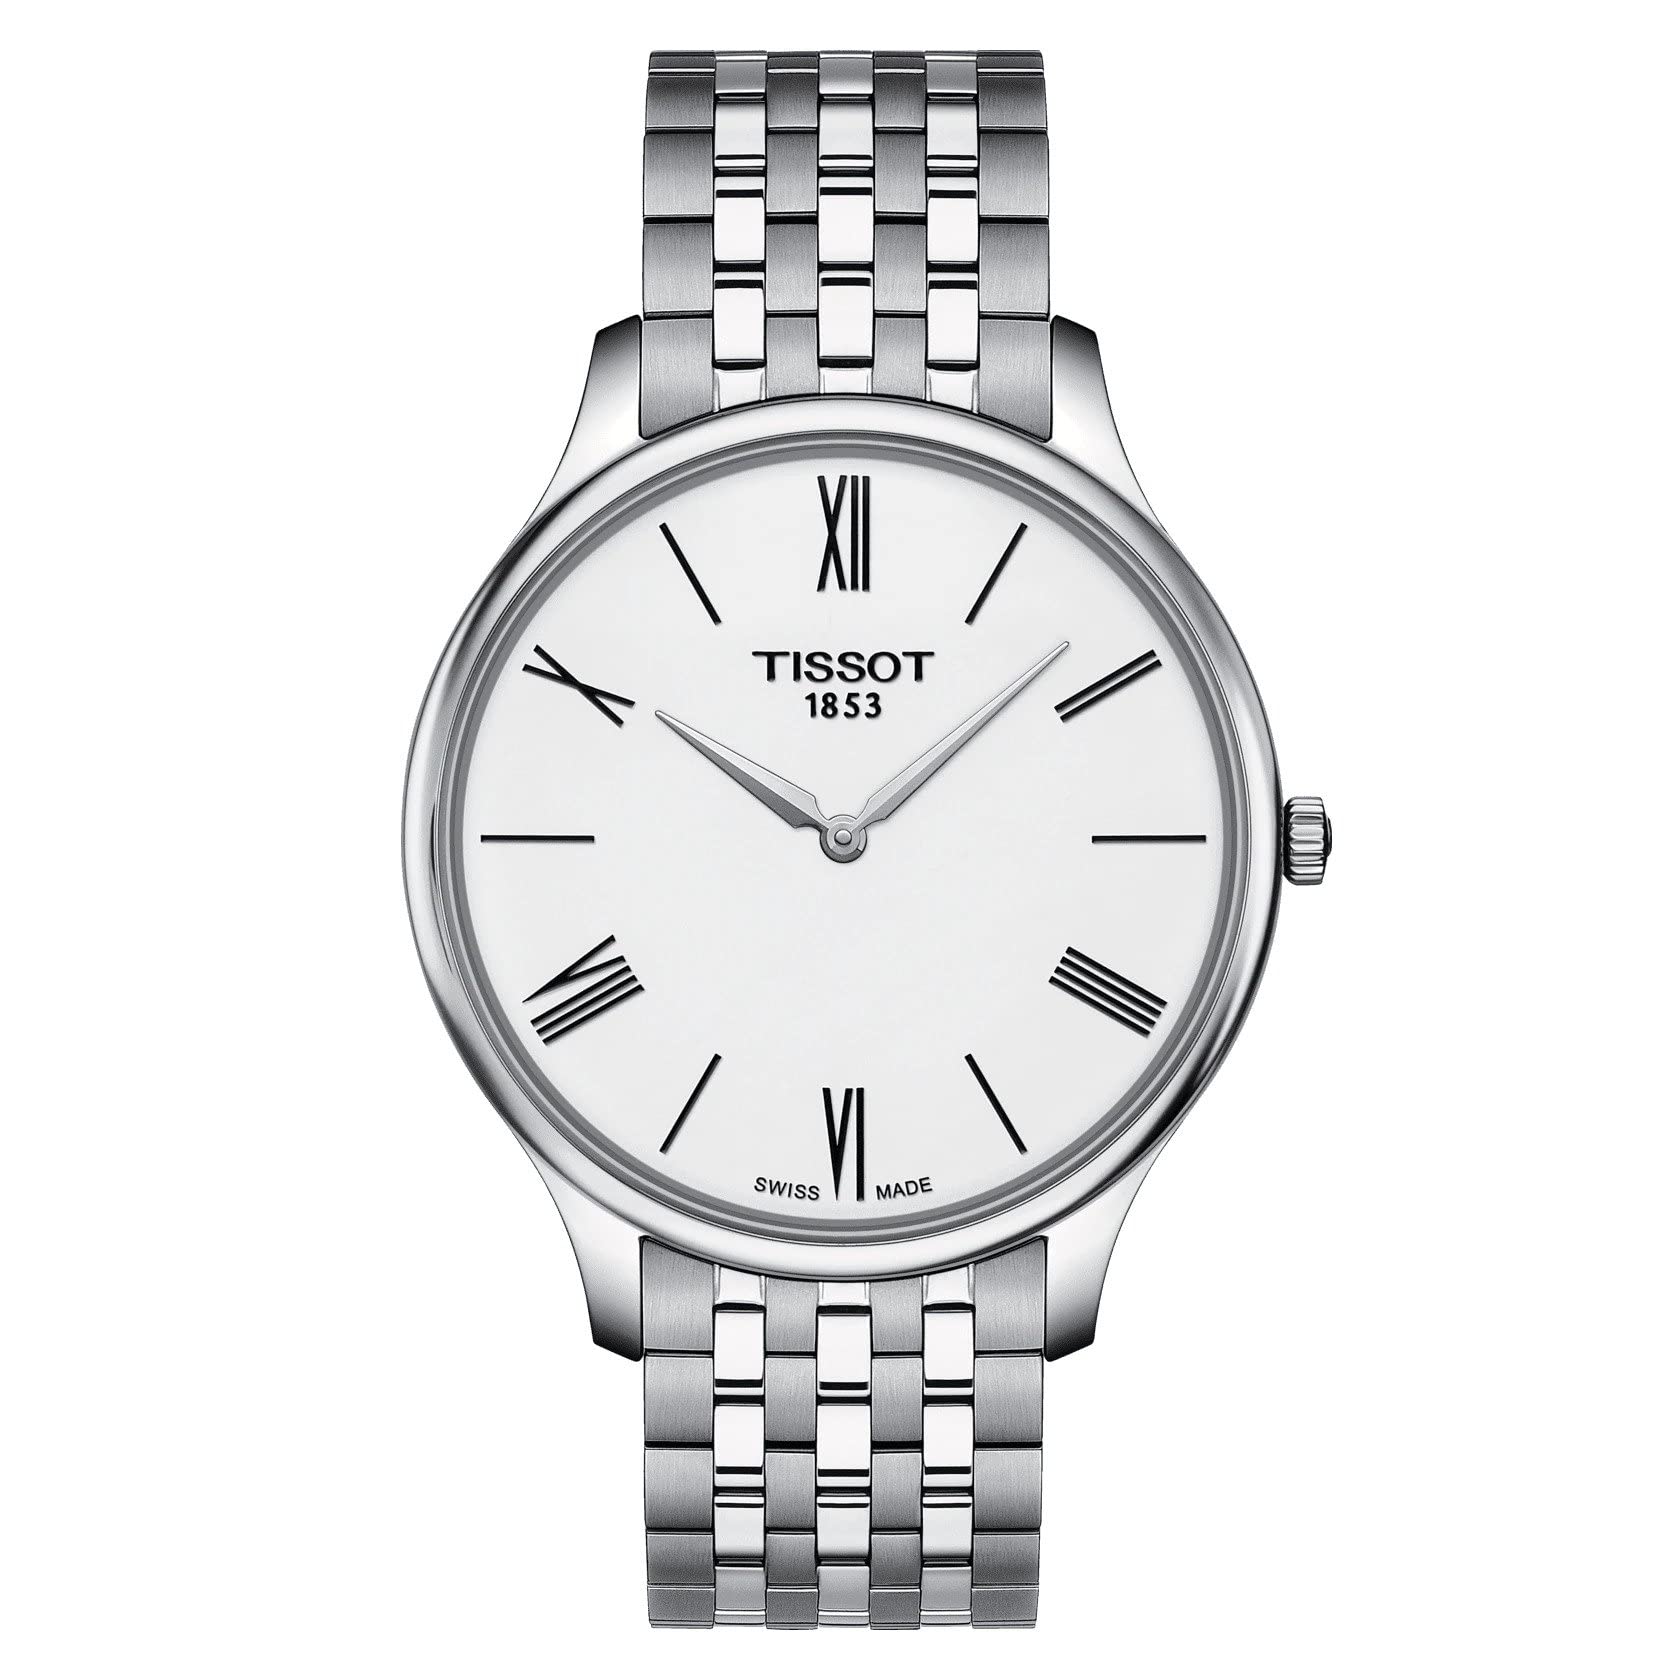 Tissot Men's Analog Quartz Watch with Stainless Steel Strap T0634091101800, Bracelet